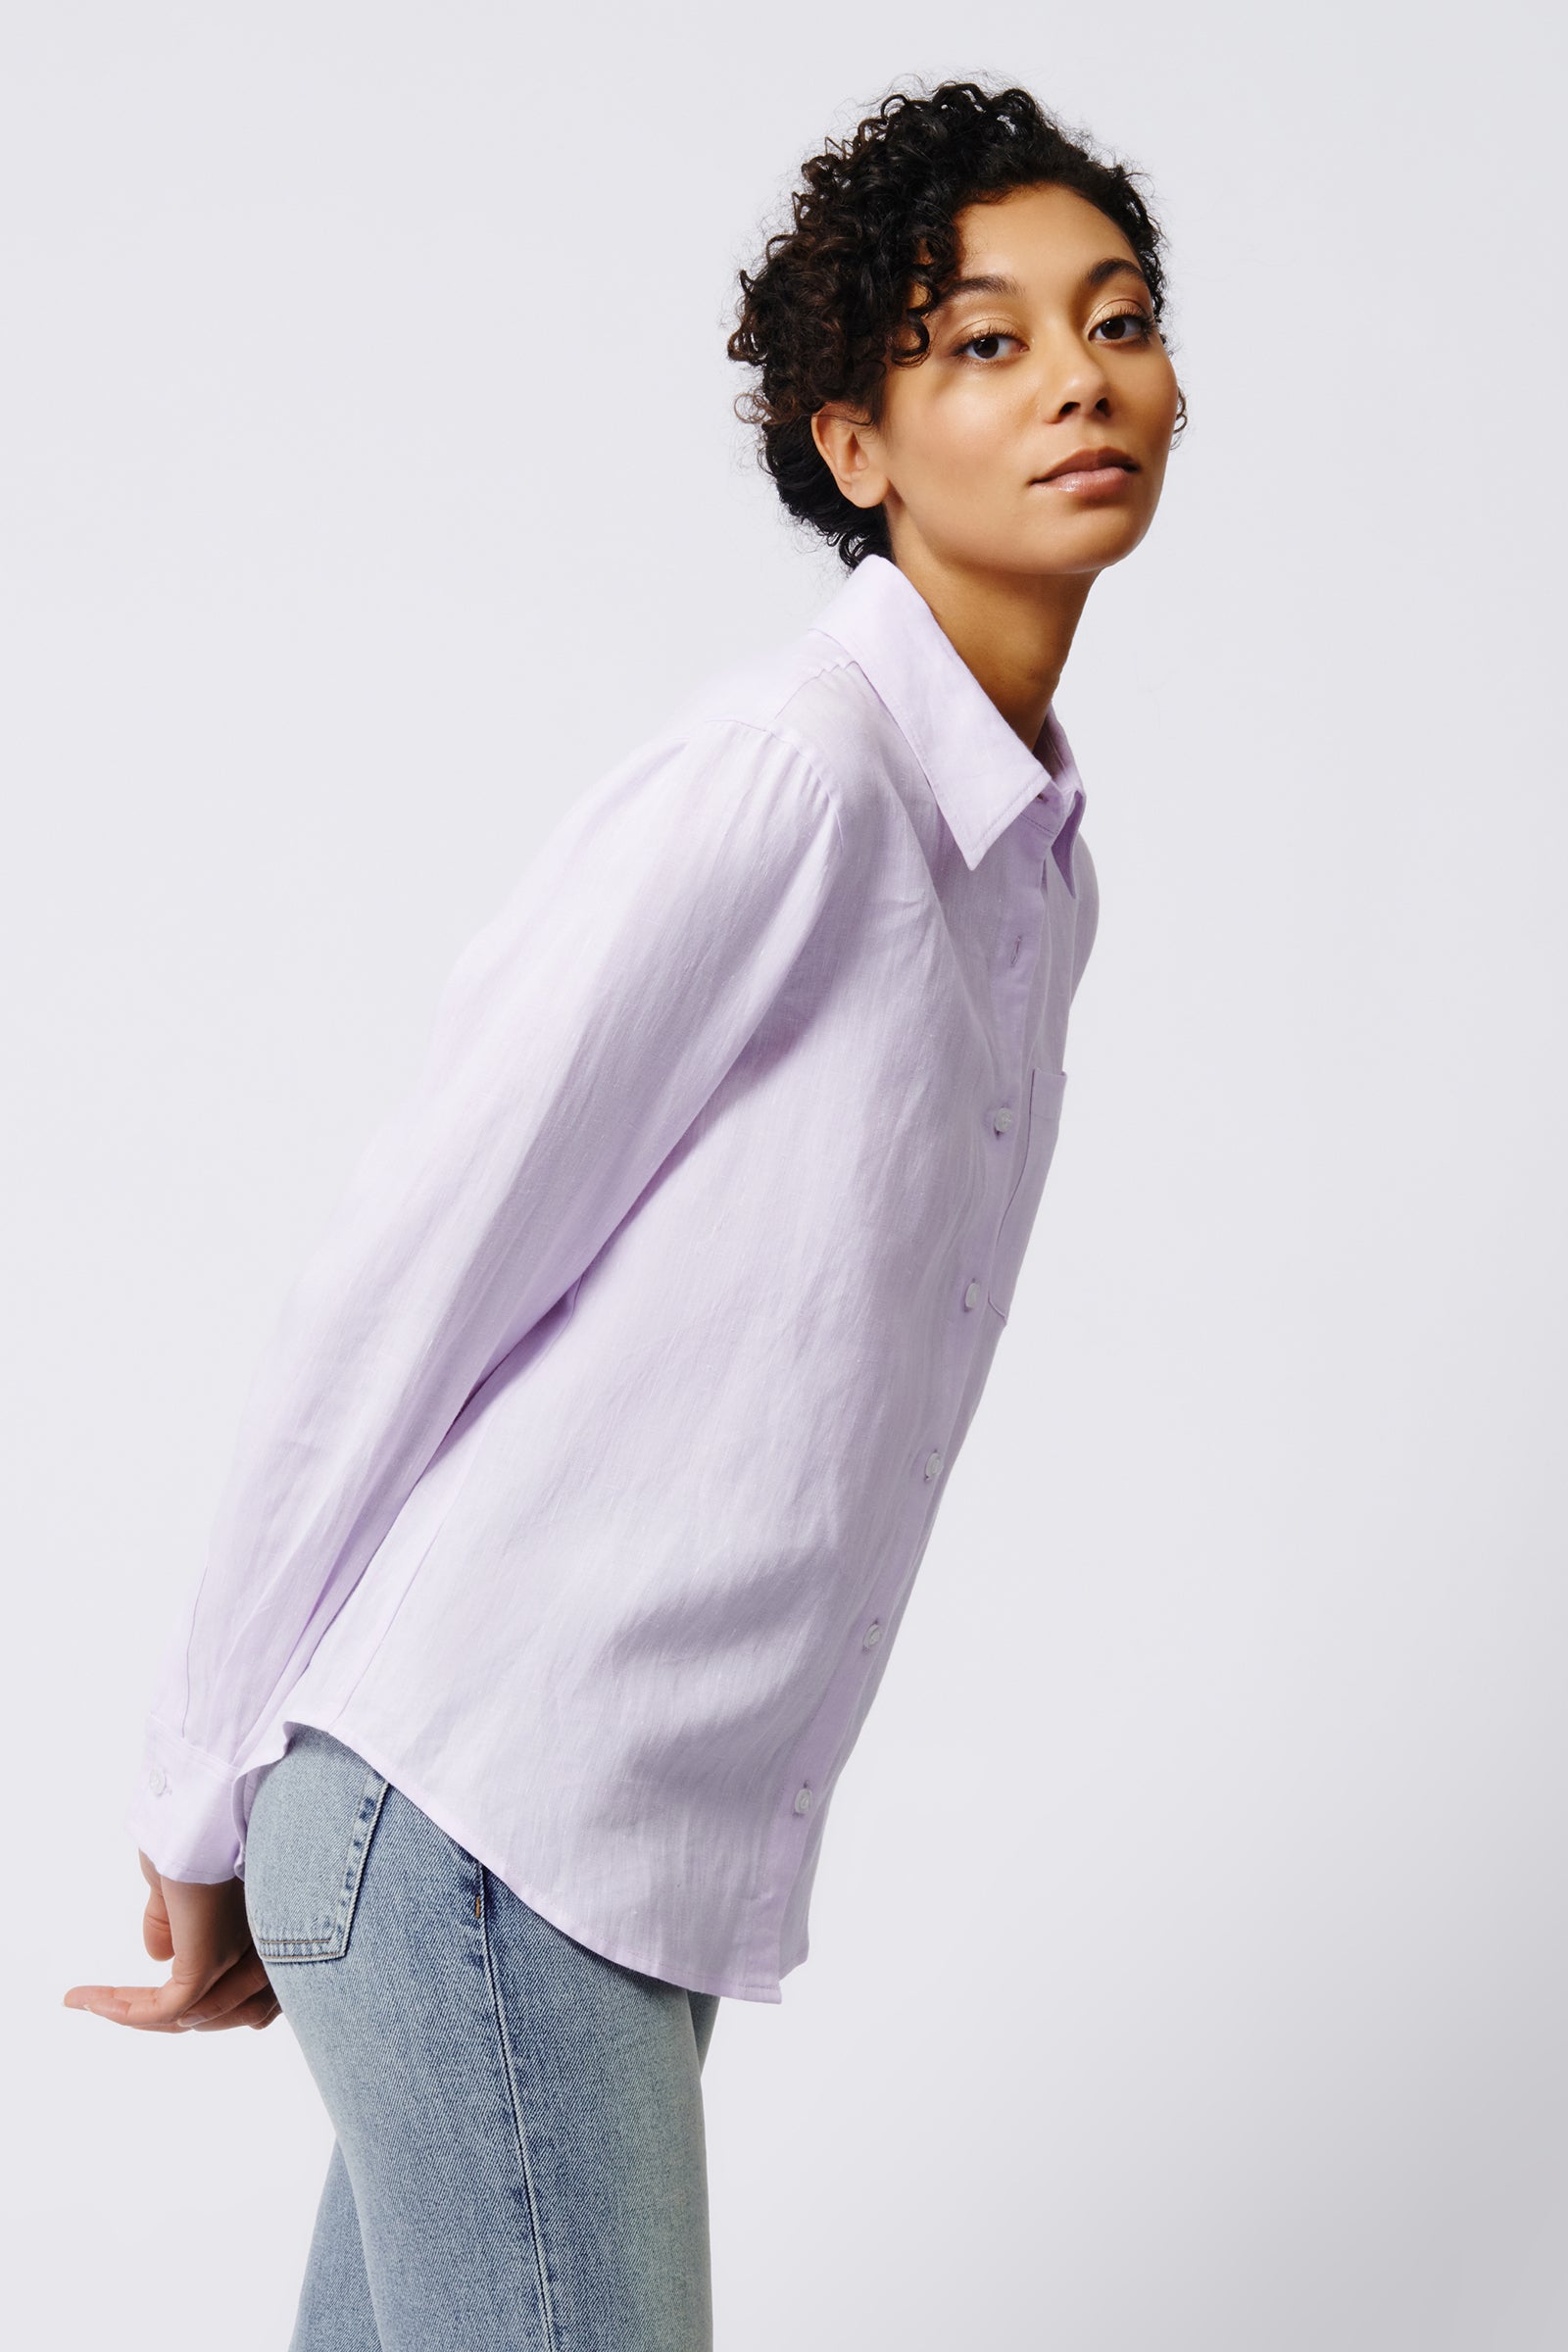 Kal Rieman Summer Shirt in Lavender on Model Side View Crop